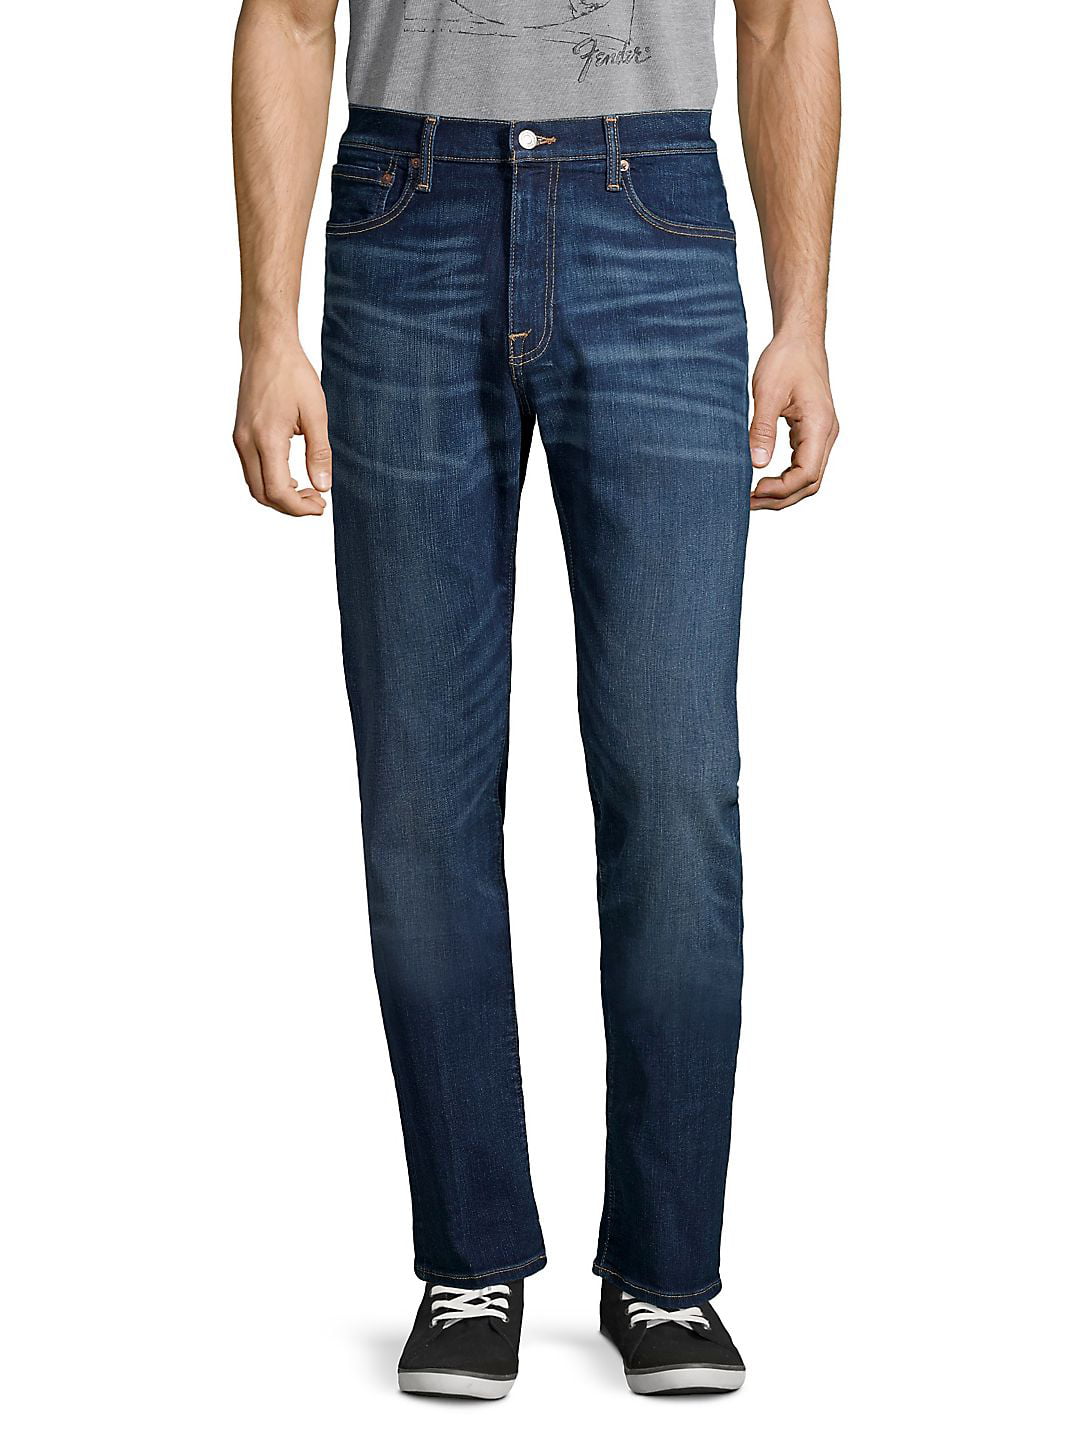 Athletic Slim-Fit Jeans - Walmart.com